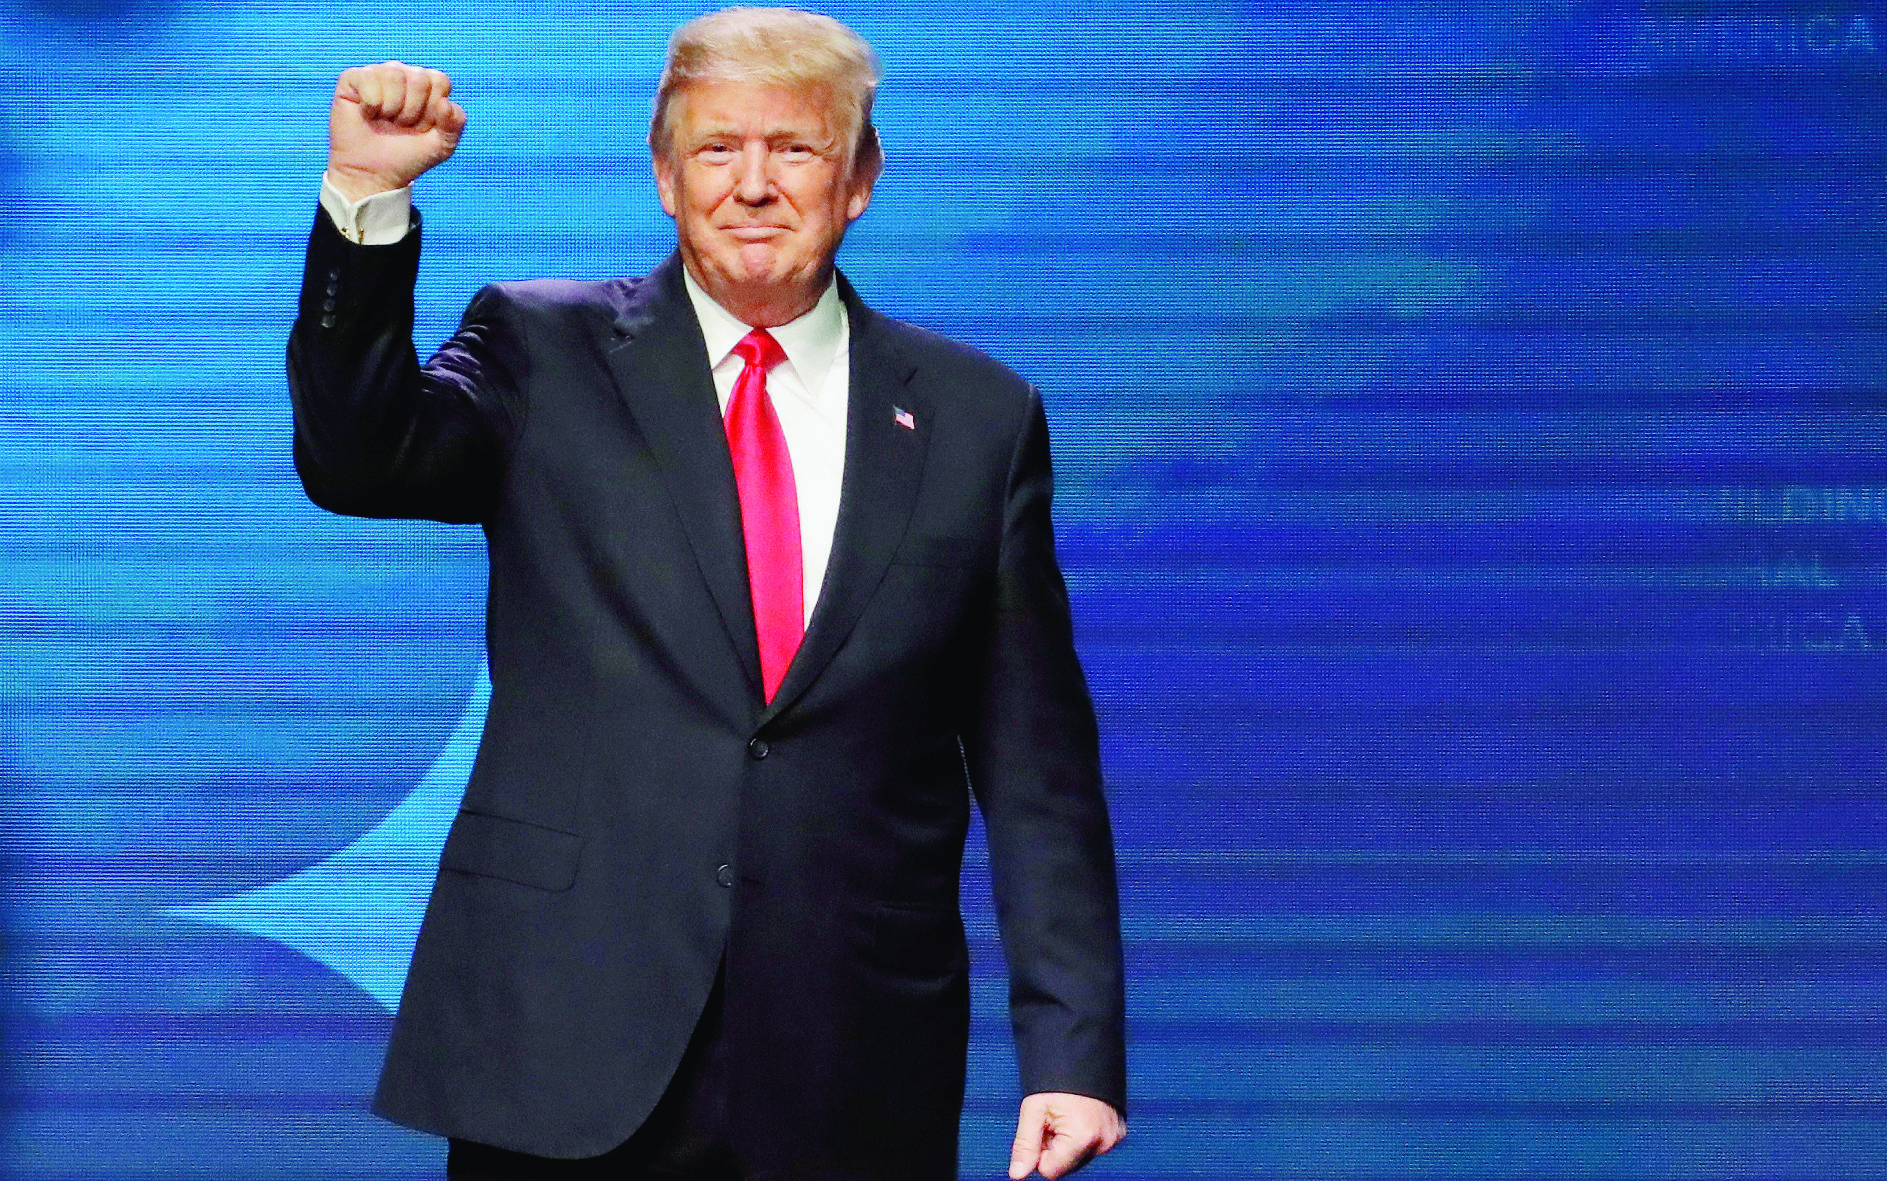 President Donald Trump acknowledges applause after speaking at the American Farm Bureau Federation annual convention Monday, Jan. 8, 2018, in Nashville, Tenn. (AP Photo/Mark Humphrey) Trump